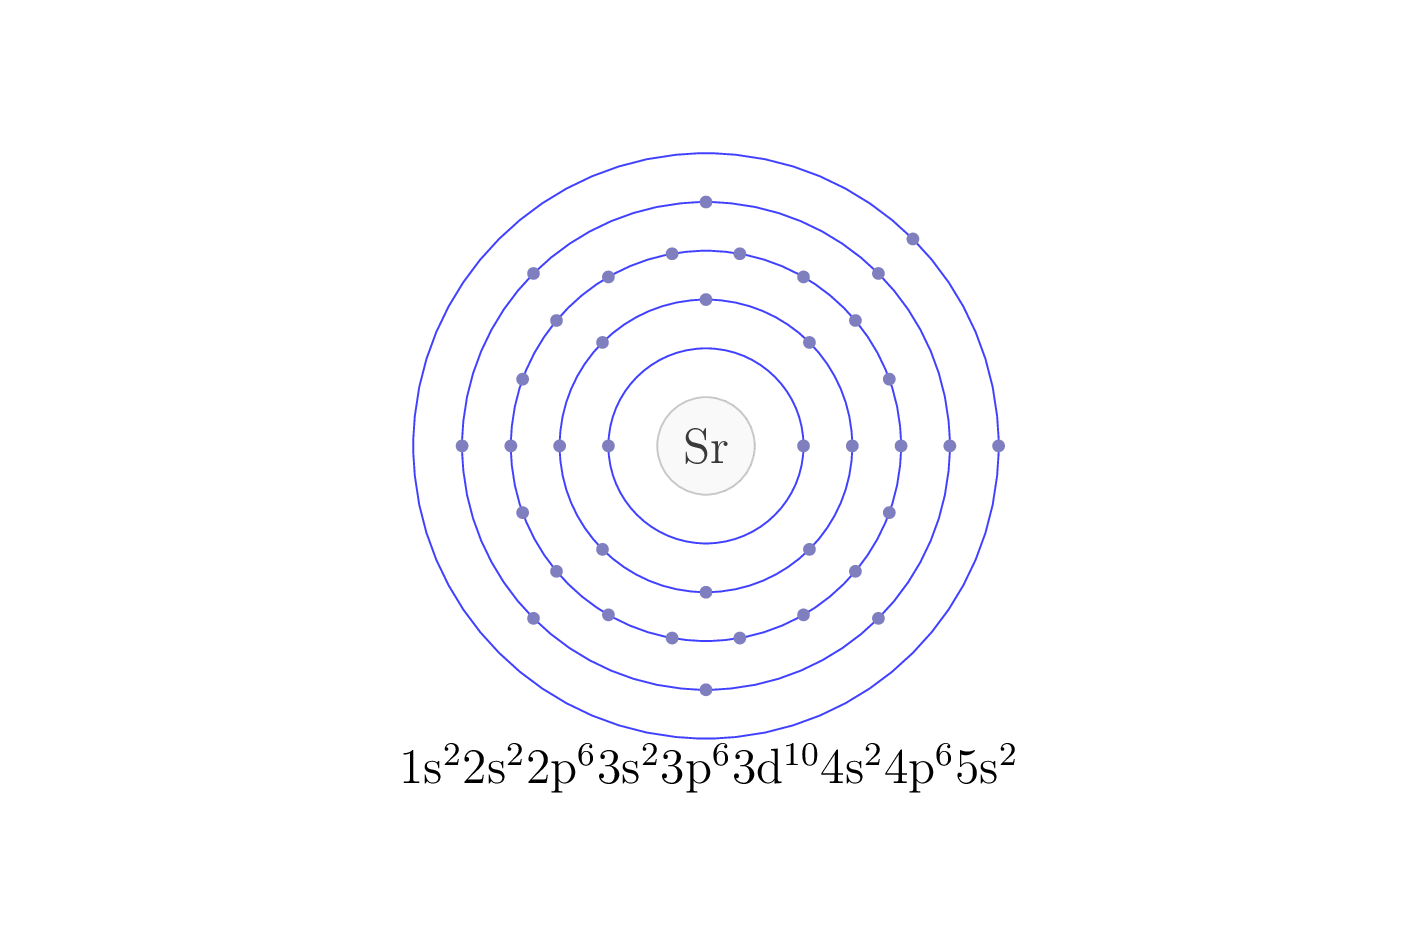 electron configuration of element Sr